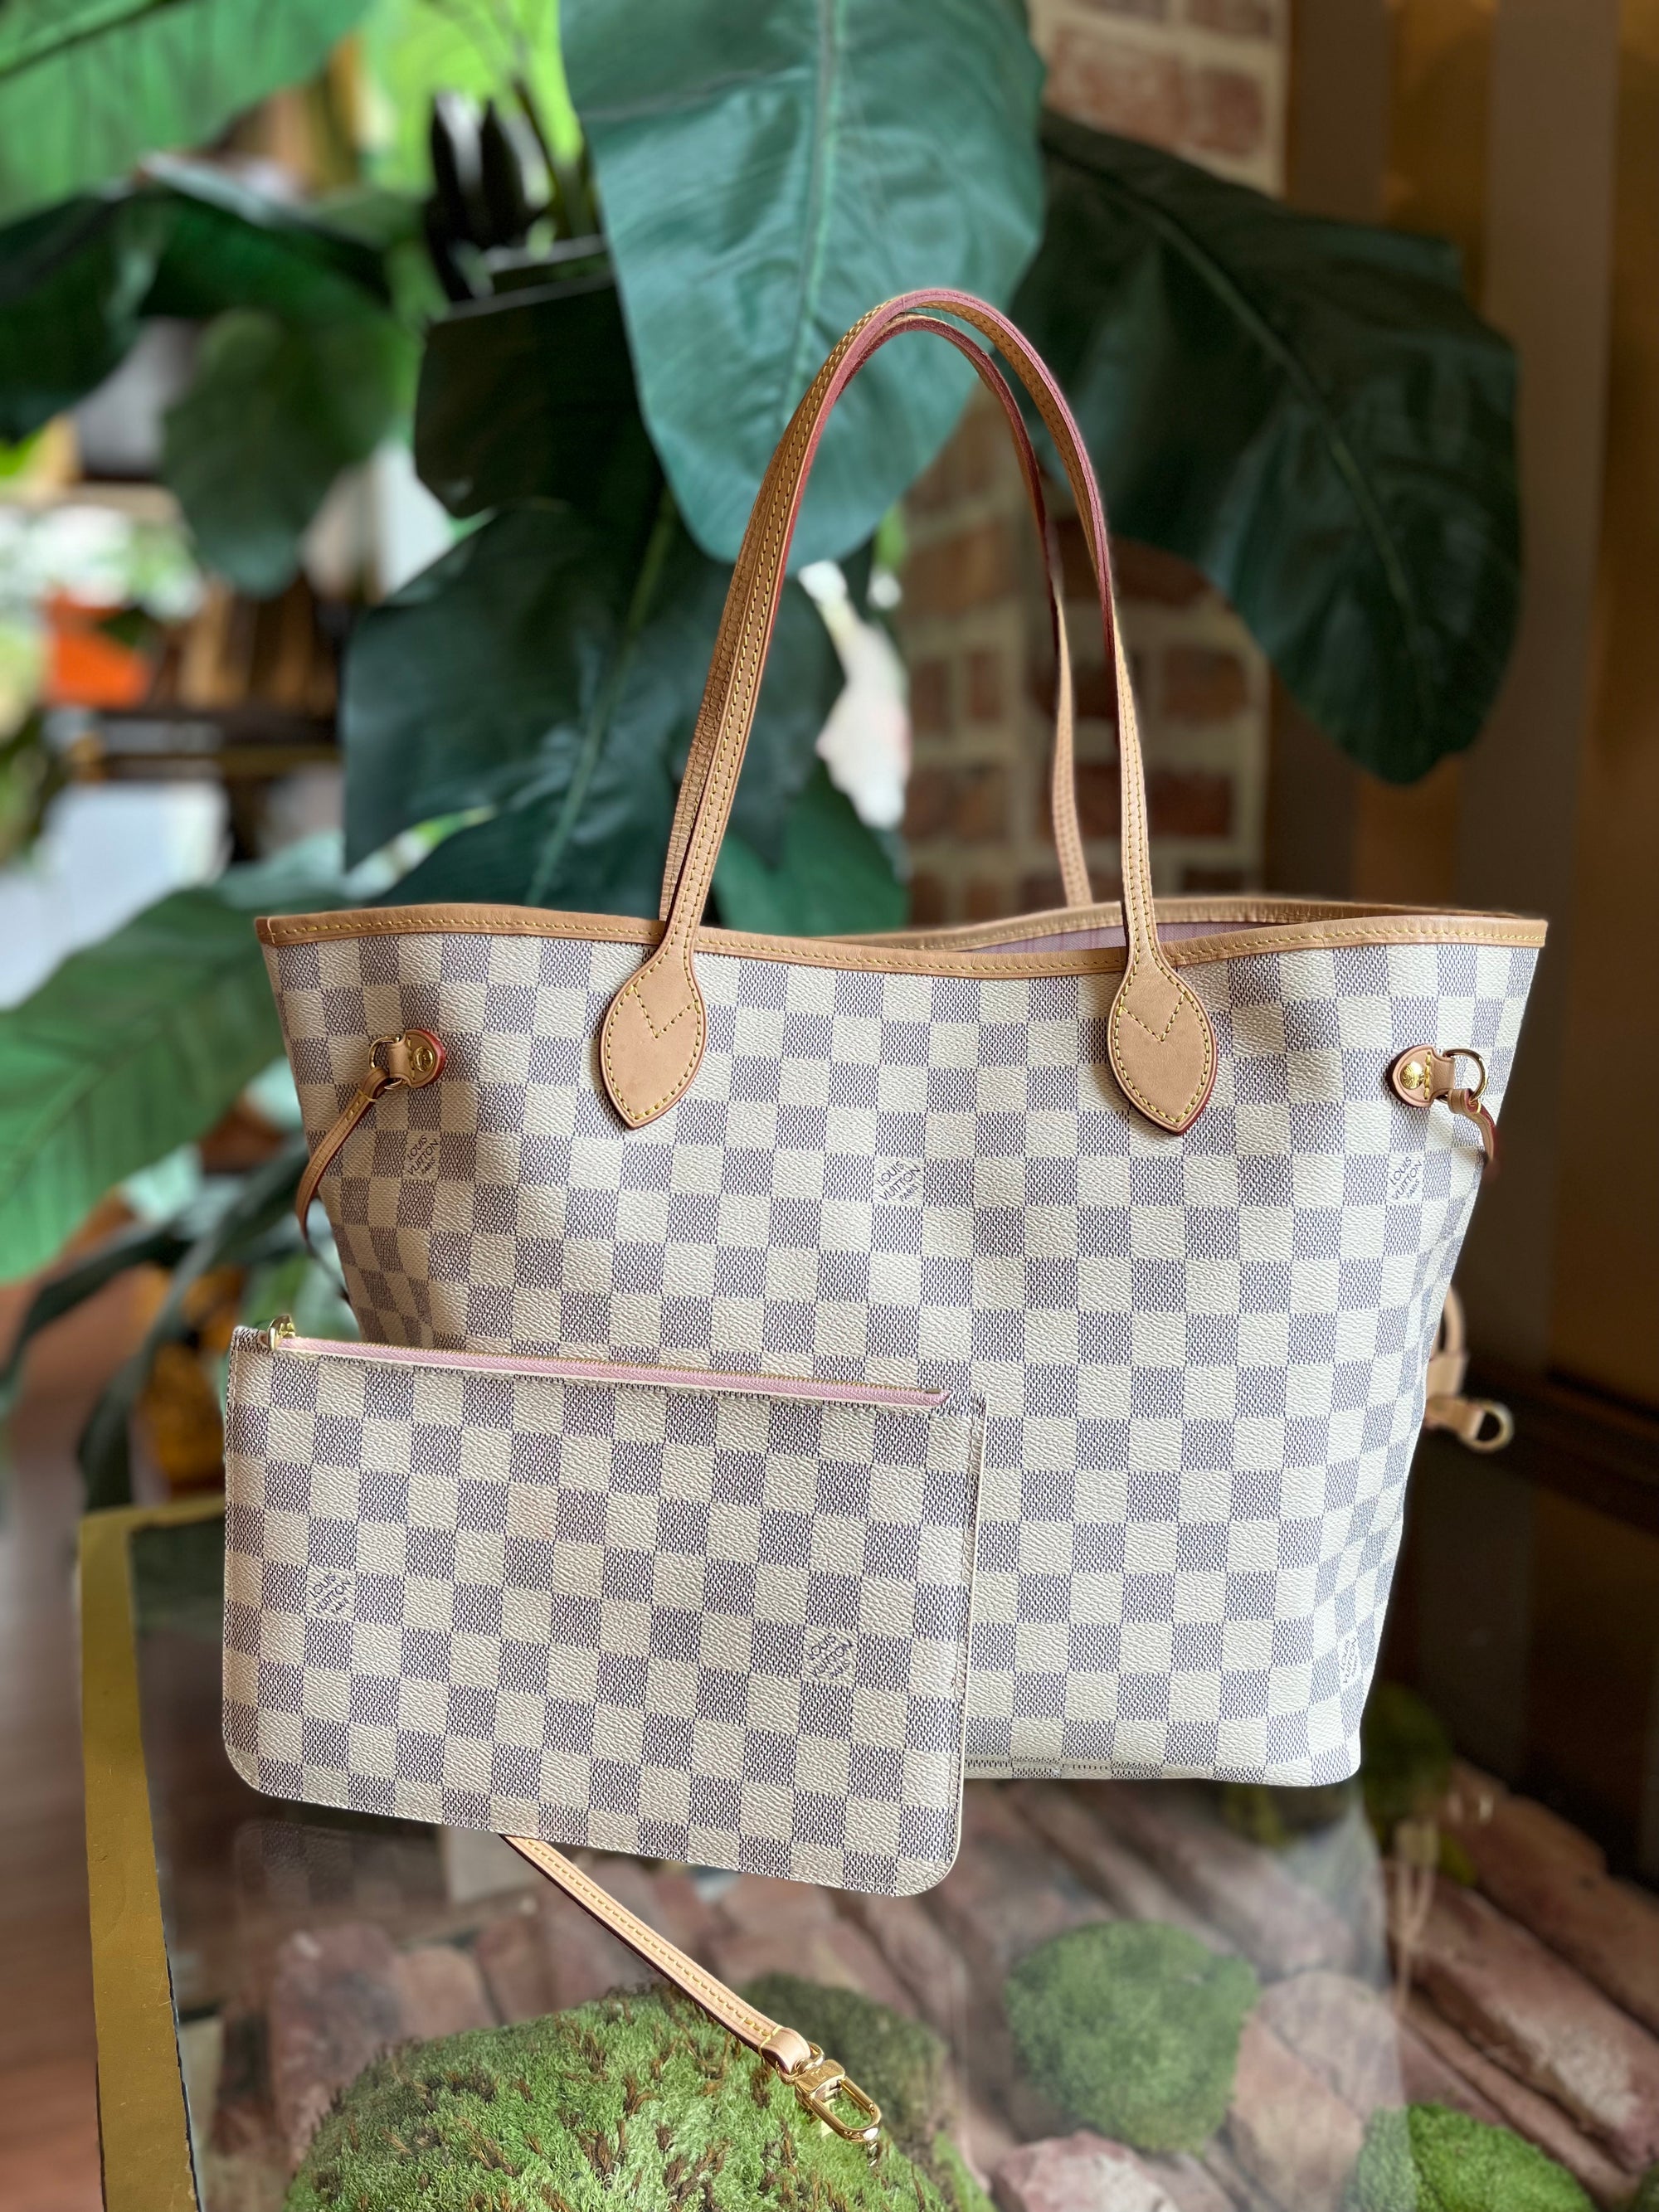 where to buy authentic louis vuitton handbags